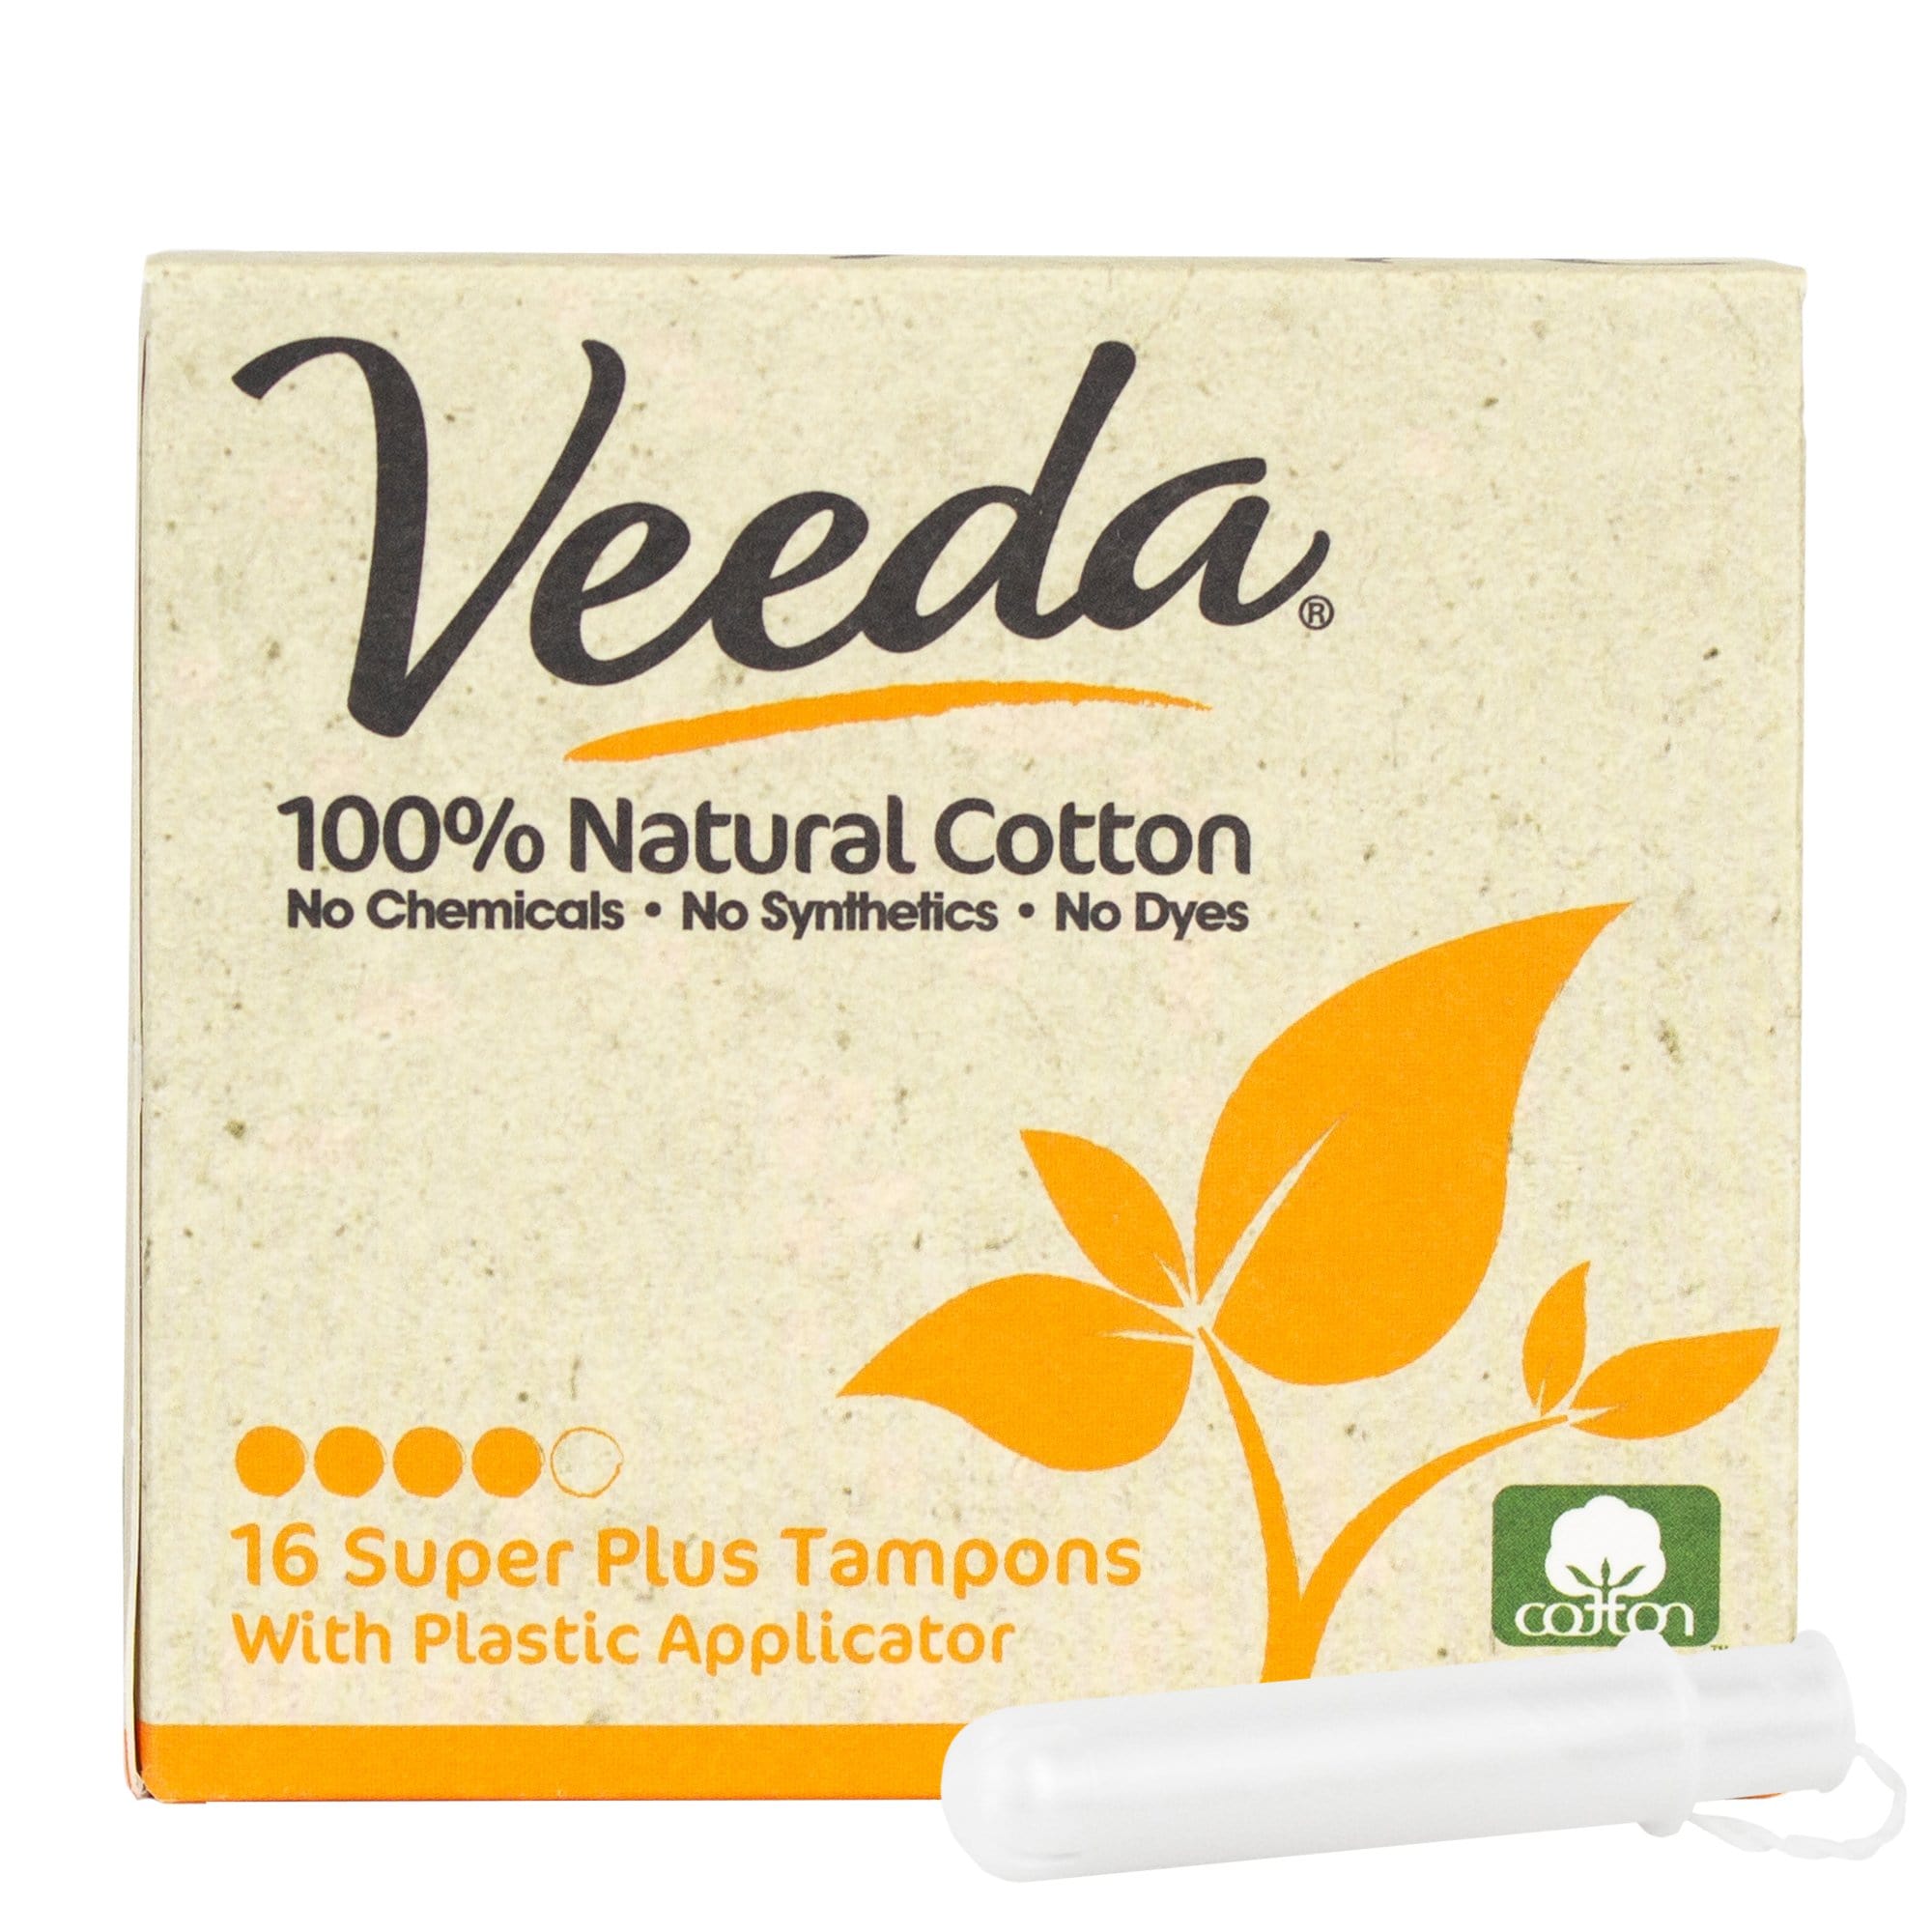 Veeda GMO-Free 100% Natural Cotton Applicator-Free Regular Tampons